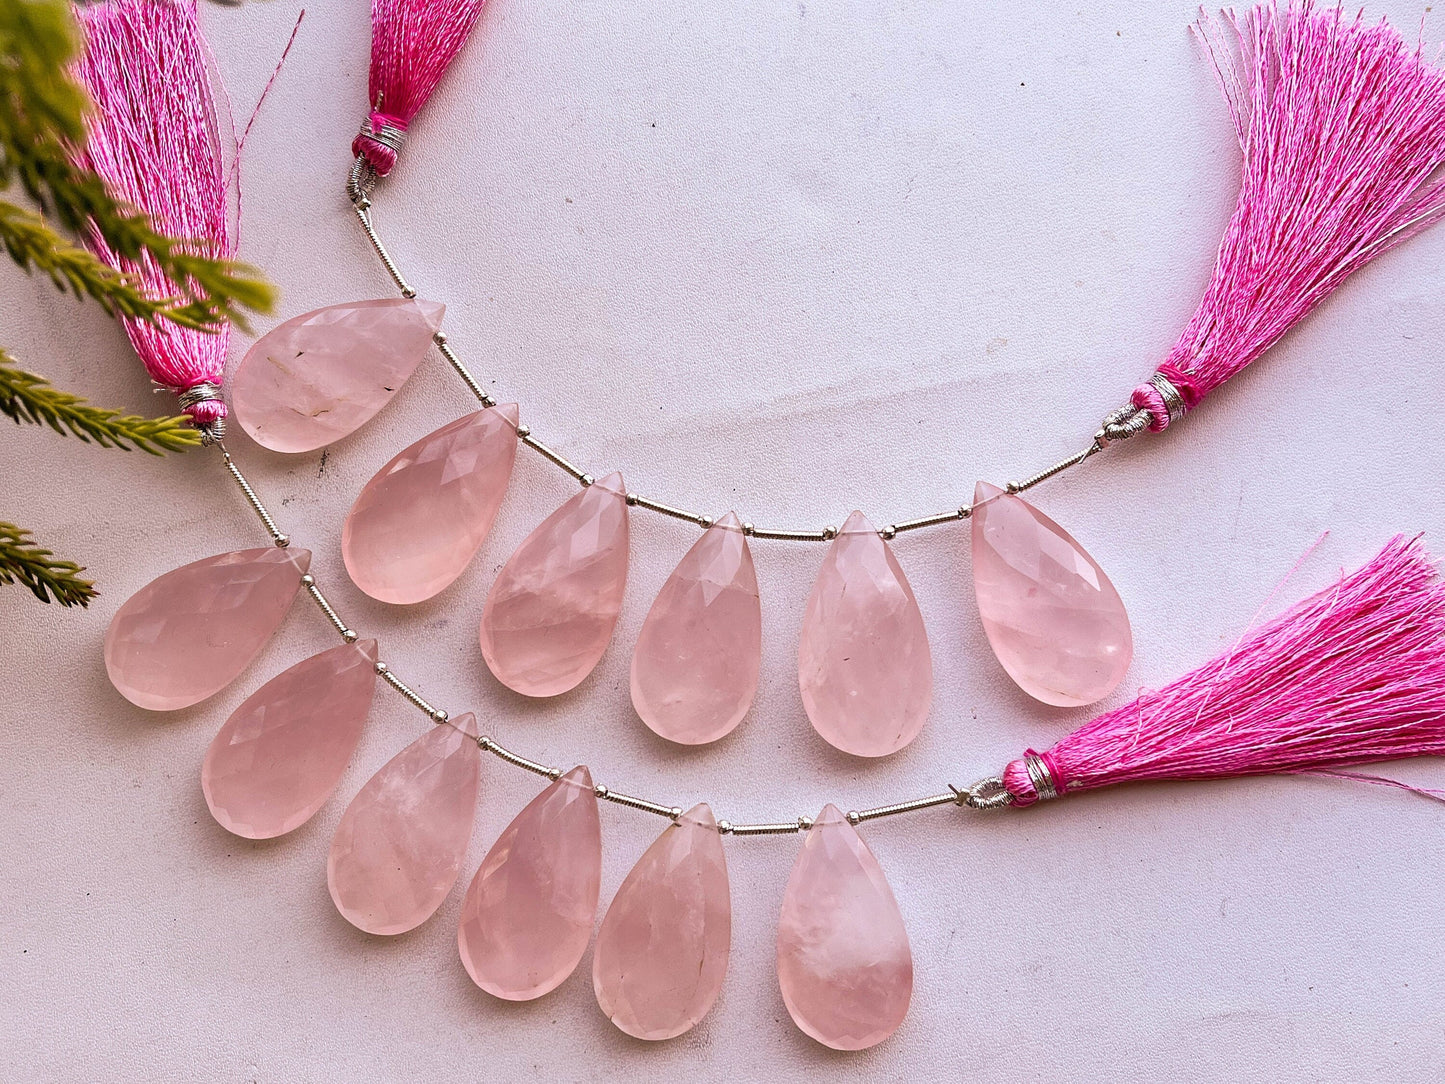 6 Pieces Rose Quartz Pear Shape Briolette Beadsforyourjewelry